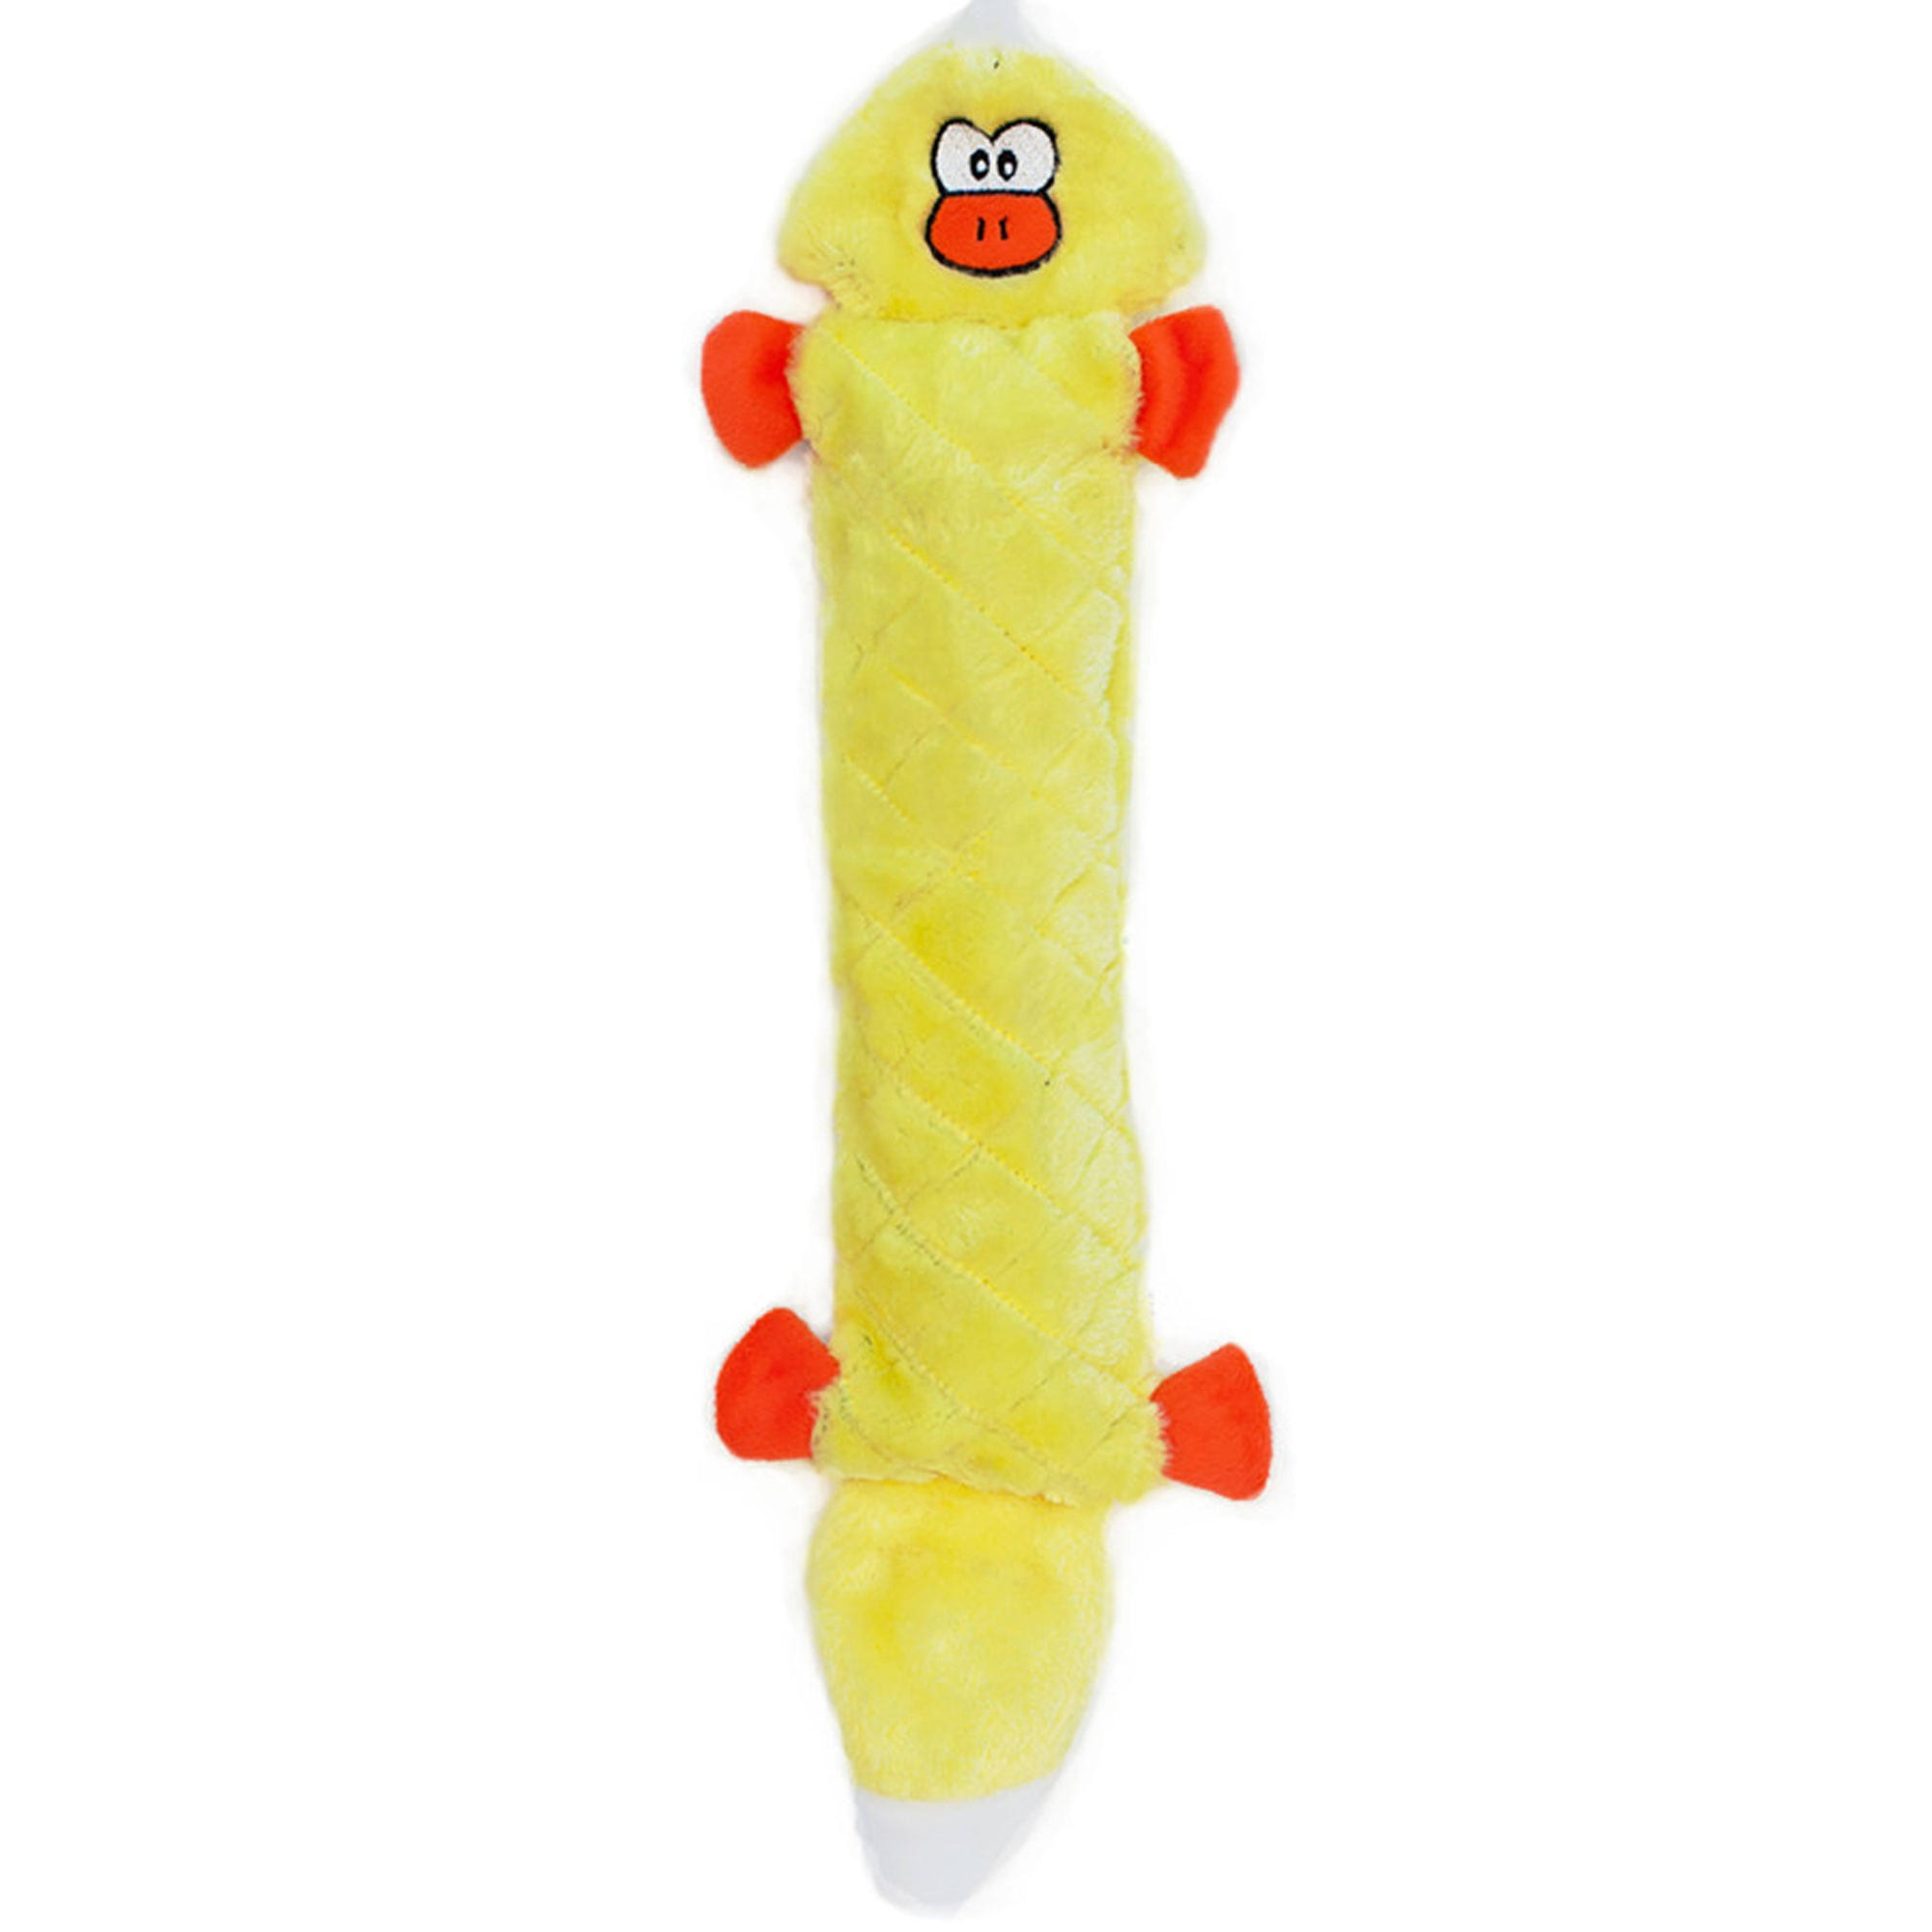 ZippyPaws Jigglerz Squeaky Plush No Stuffing Dog Toy - Duck